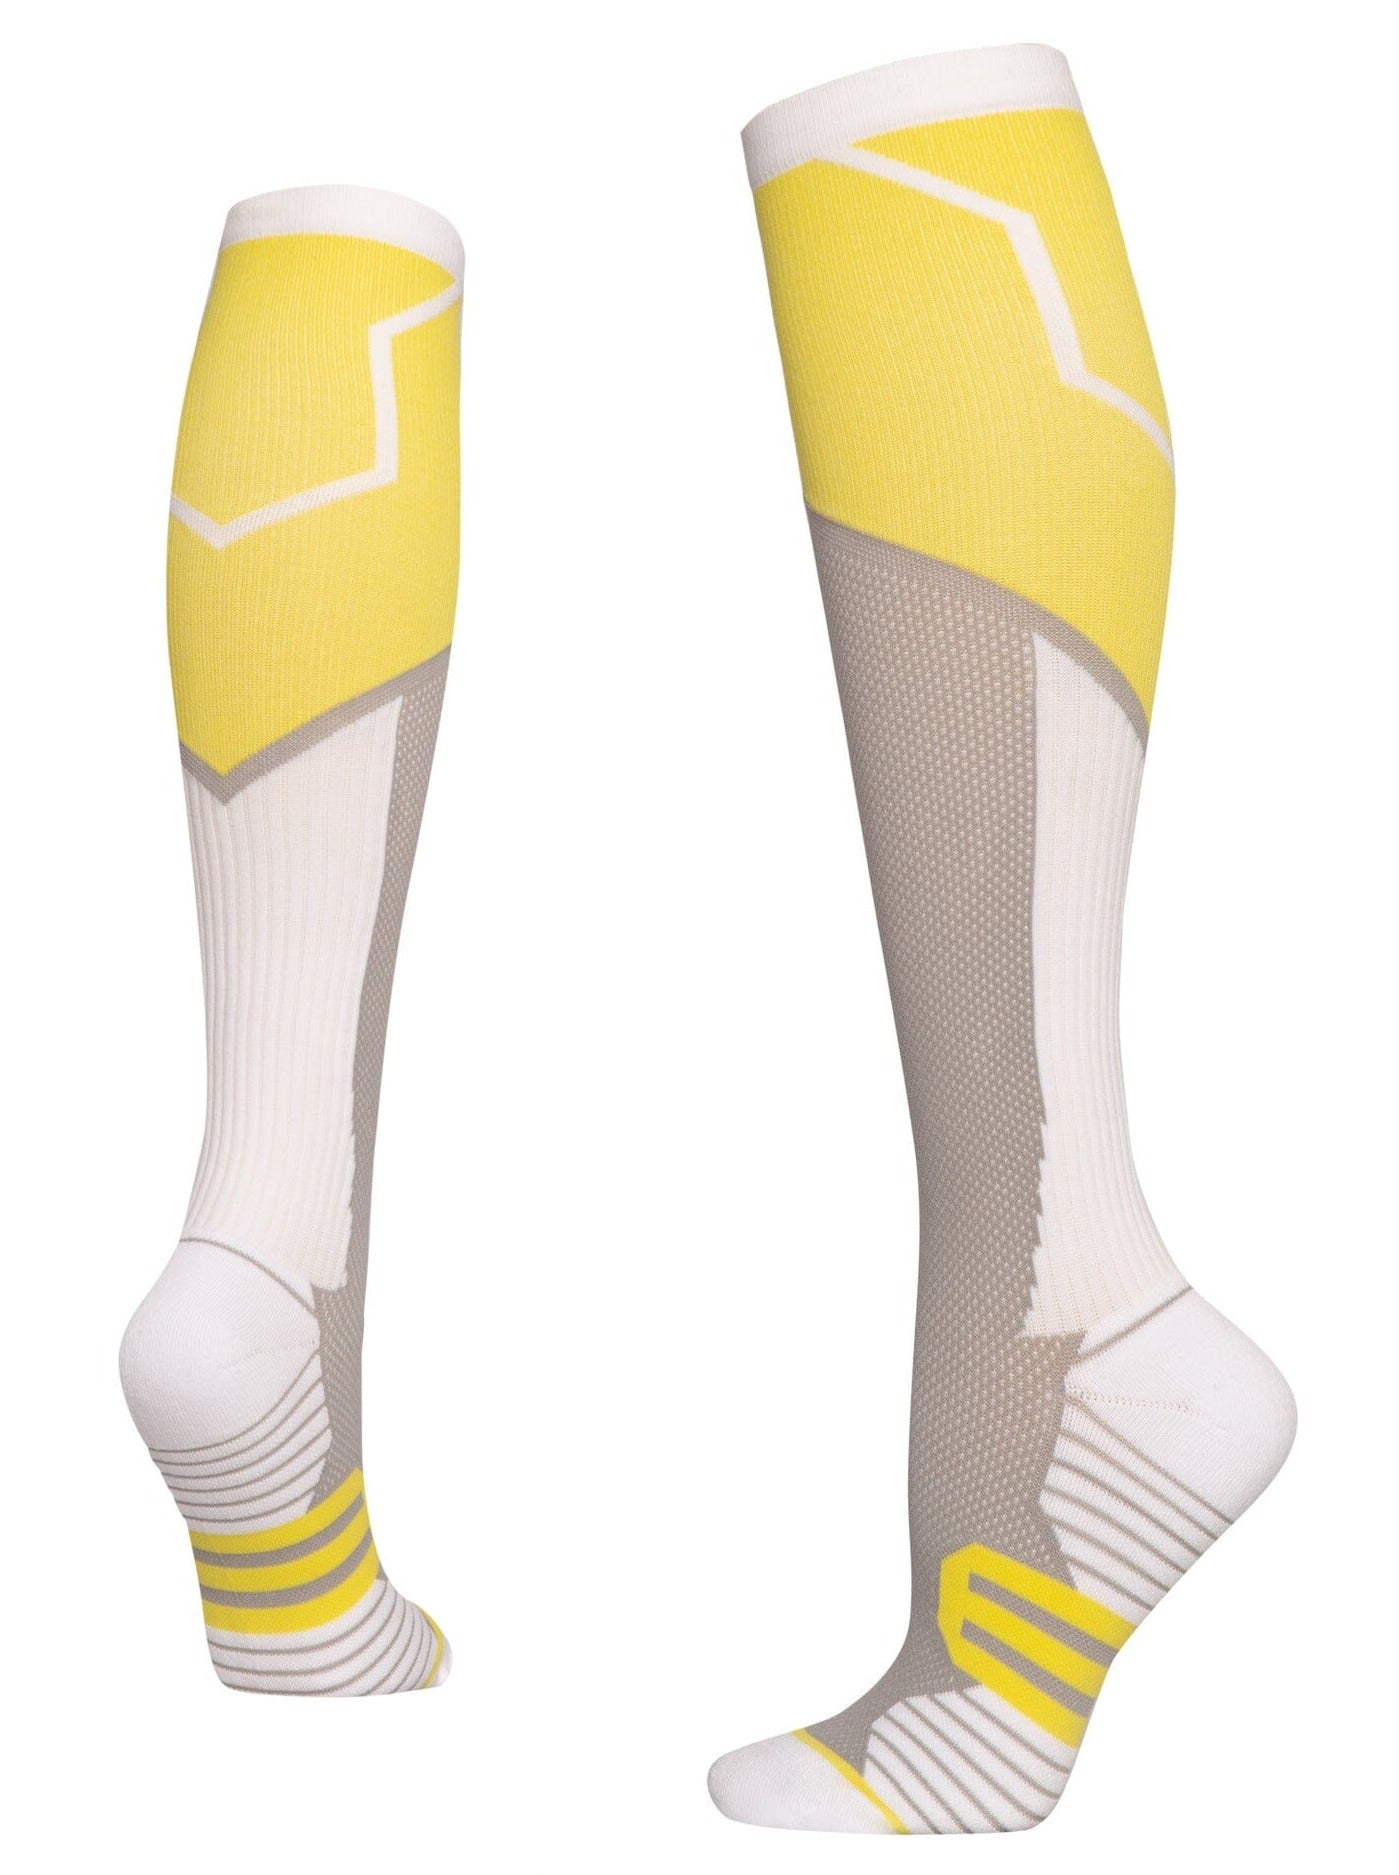 Outdoor sports pressure socks long tube skipping rope fitness calf socks sports muscles can compress socks PinchBox S/M(36-40) Yellow 